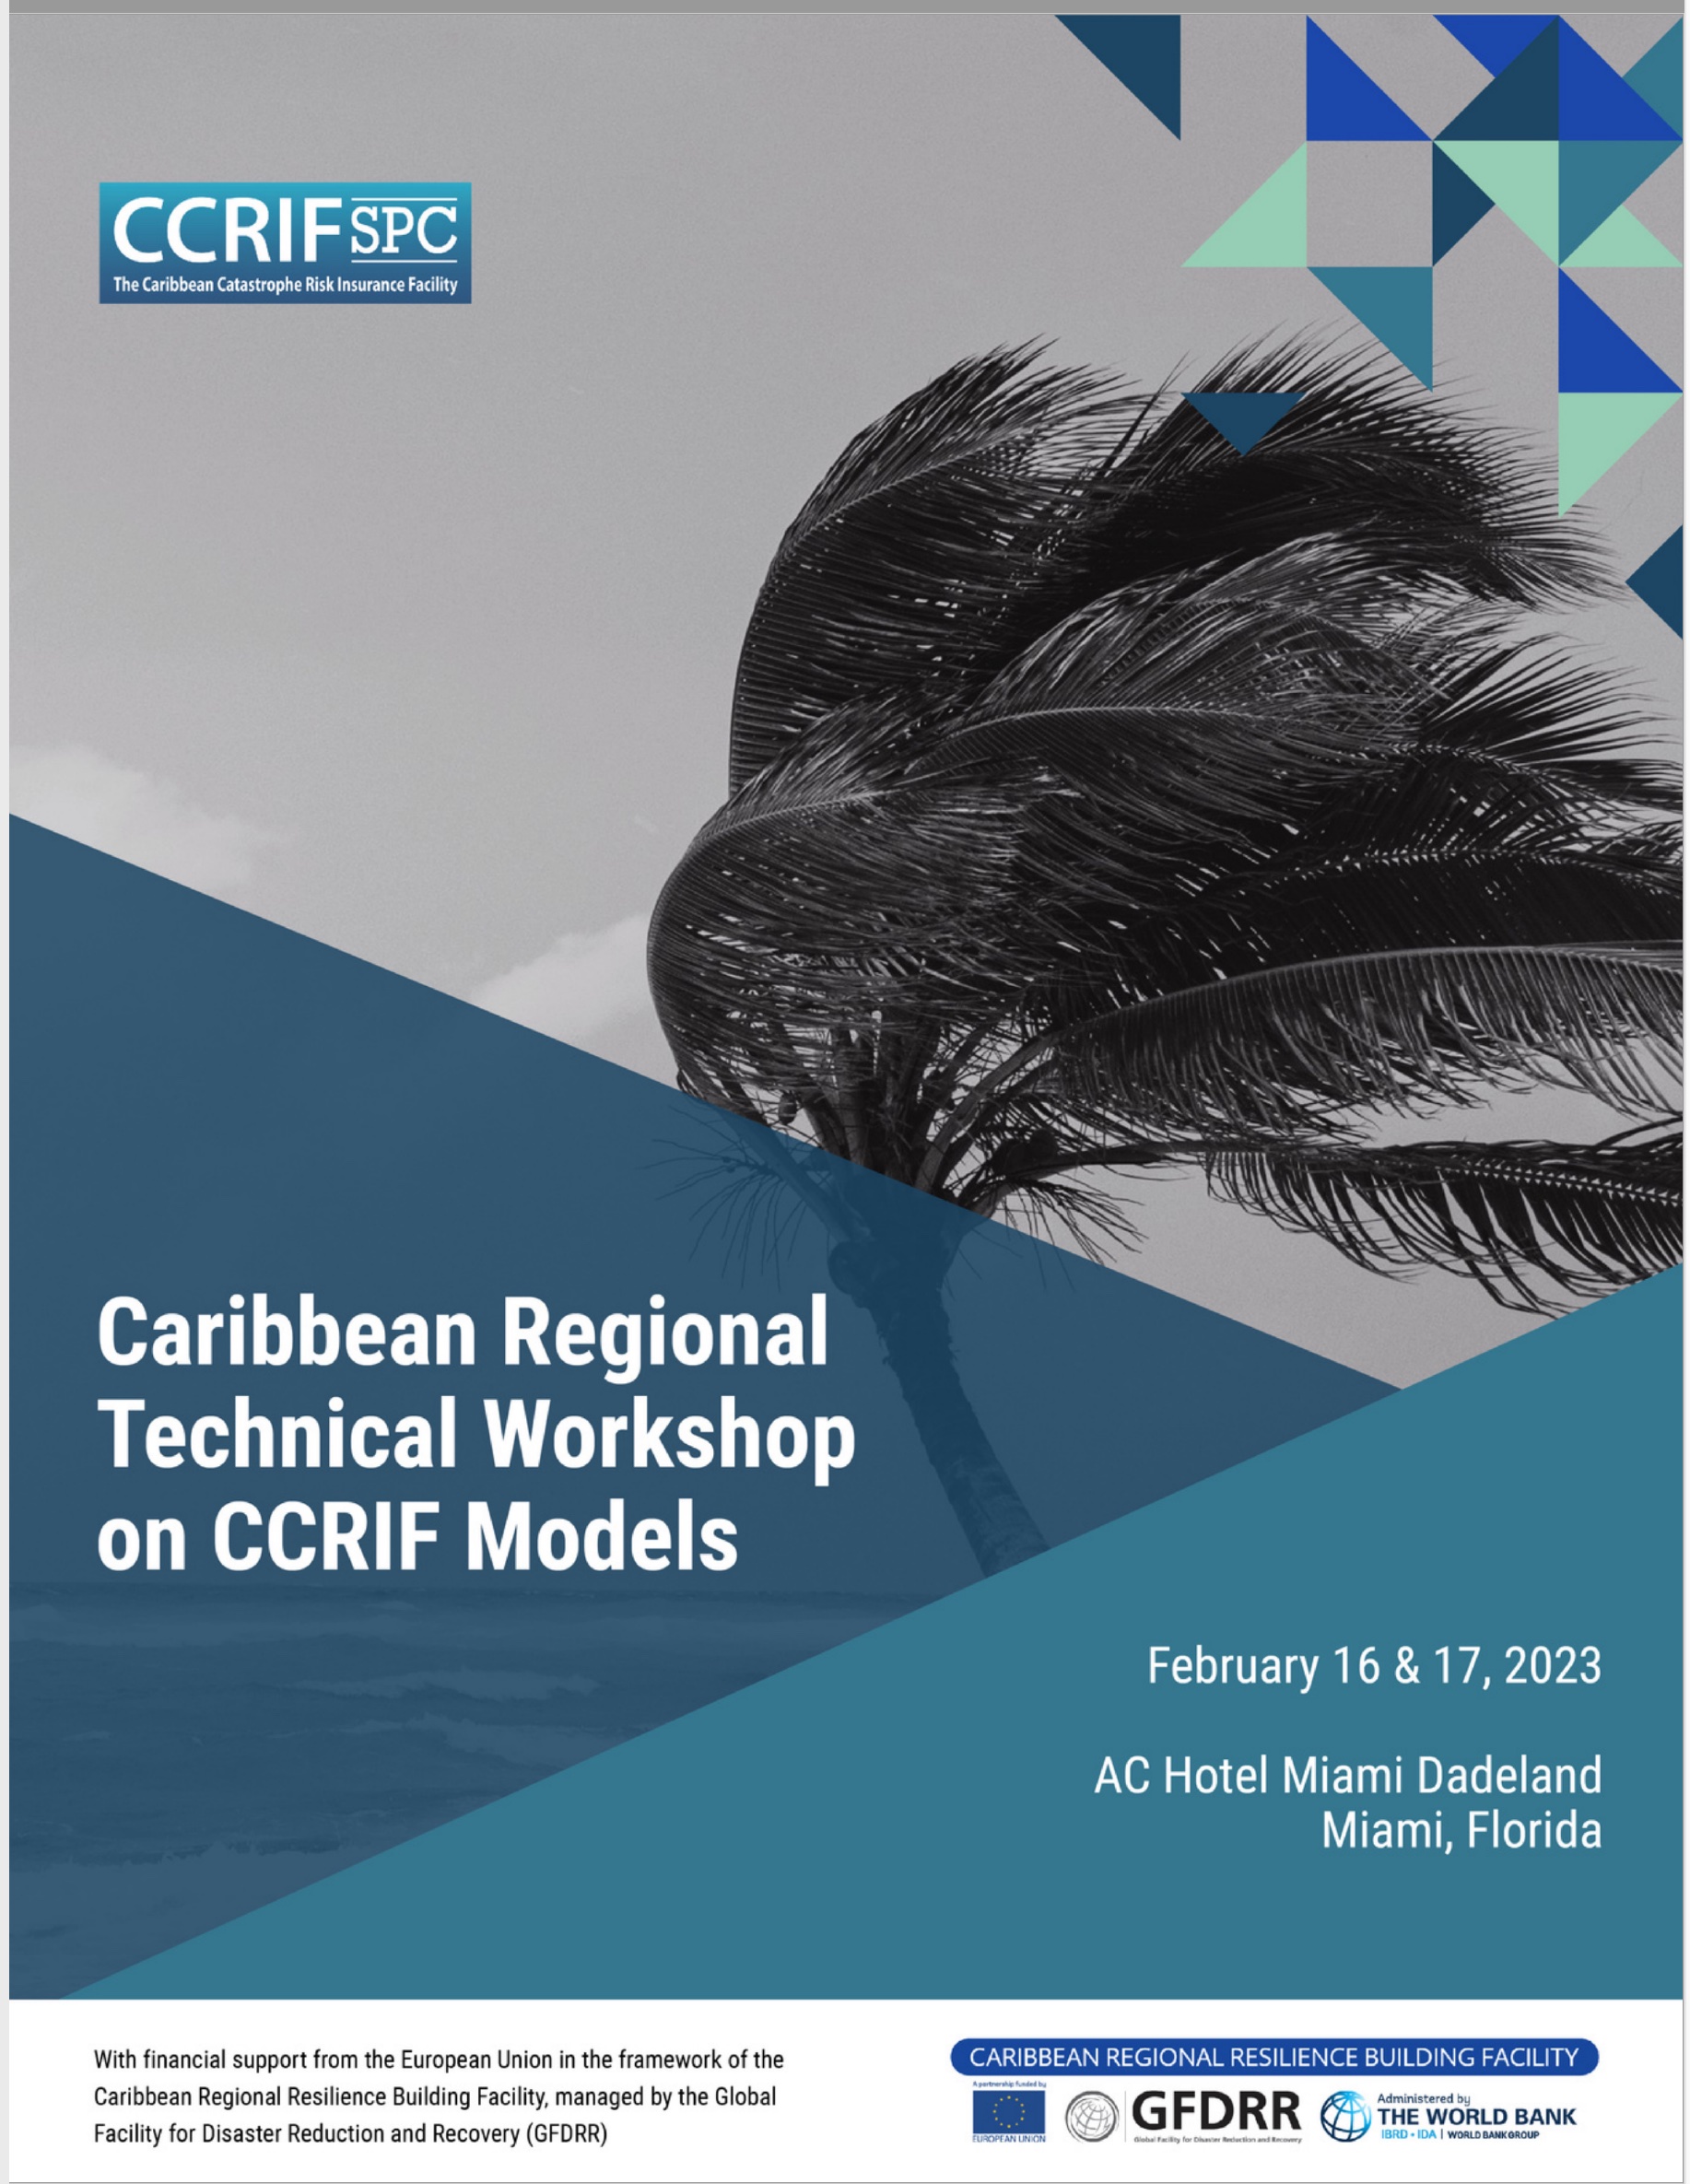 https://www.ccrif.org/sites/default/files/2023-cari-reg-tech-workshop/Caribbean-Regional-Technical-Workshop-Agenda.jpg